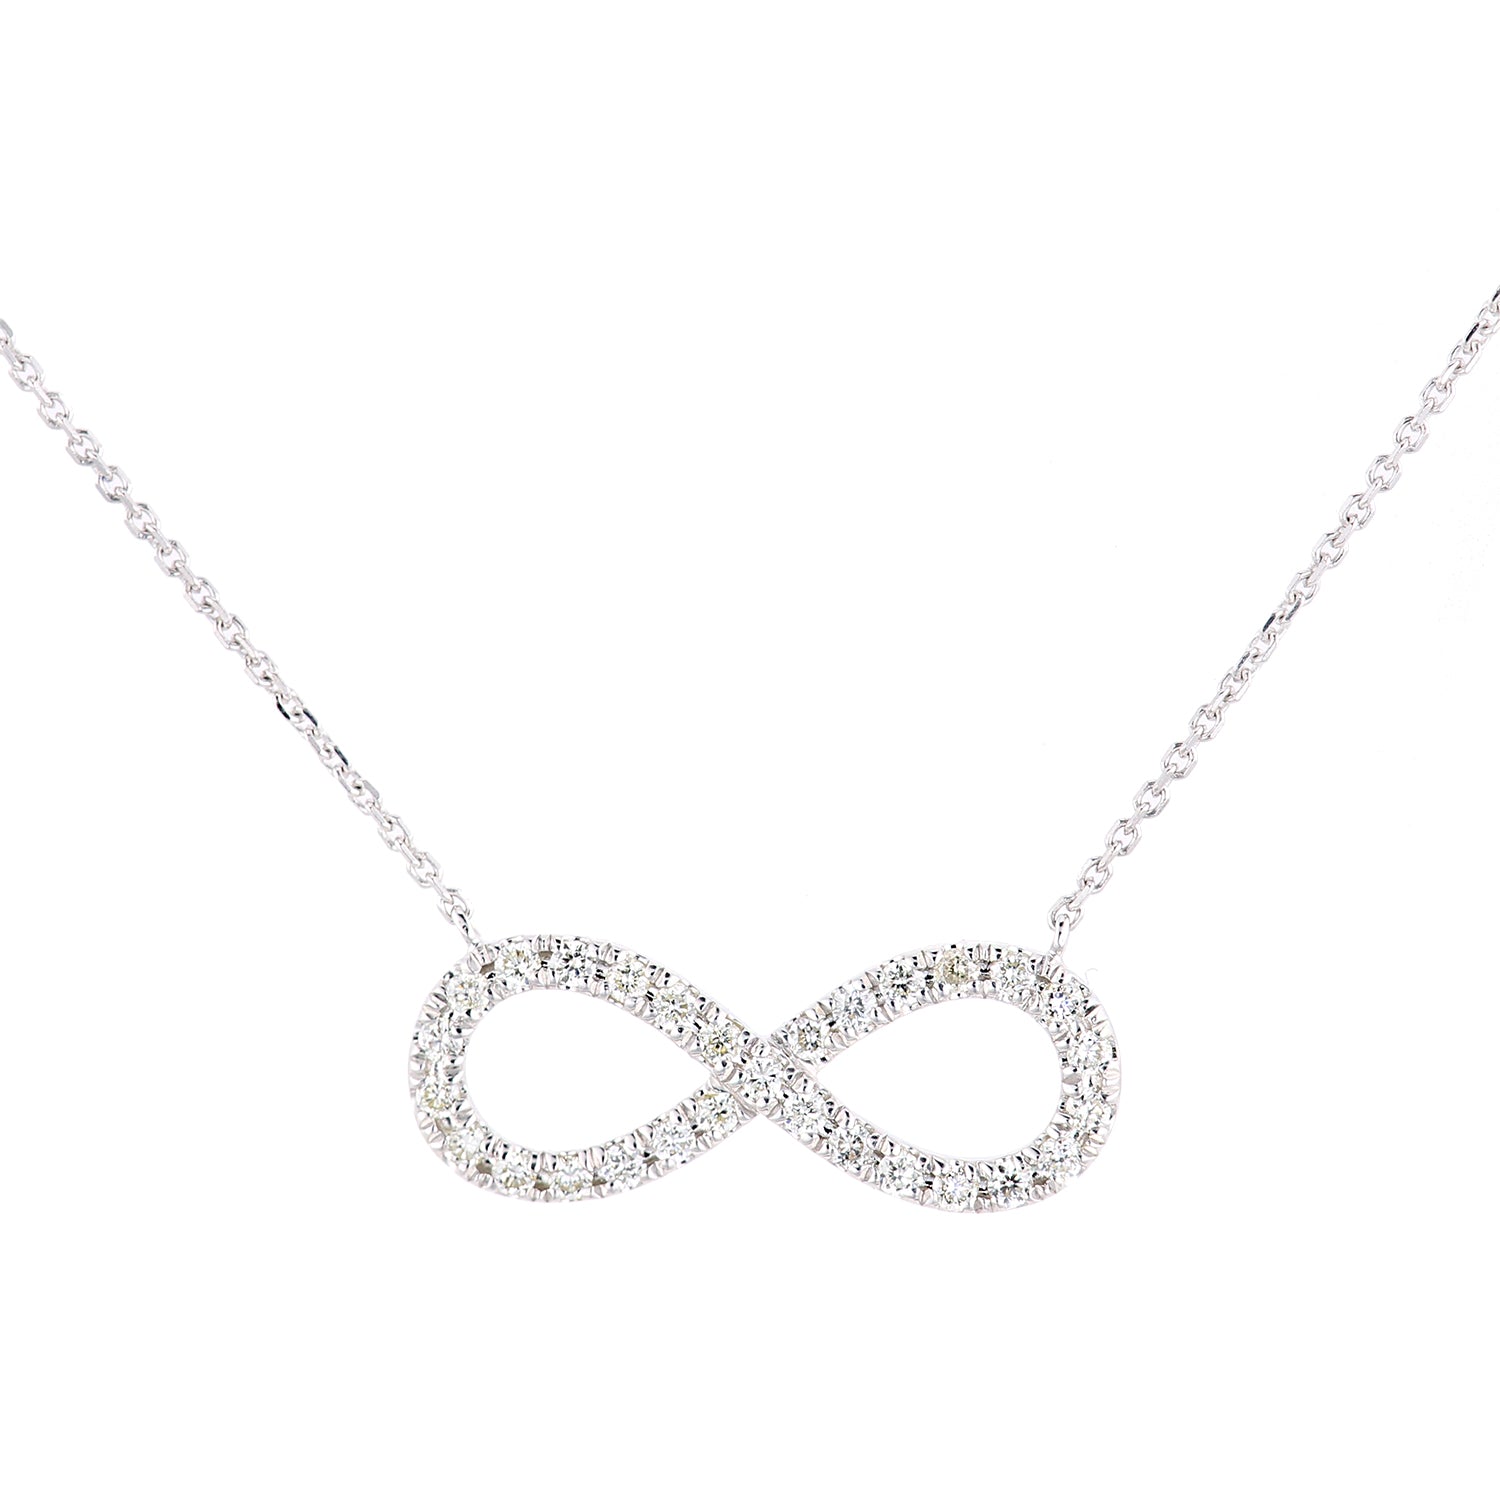 9ct White Gold  20pts Diamond Infinity Charm Necklace 18 inch - PNEAXL20032W